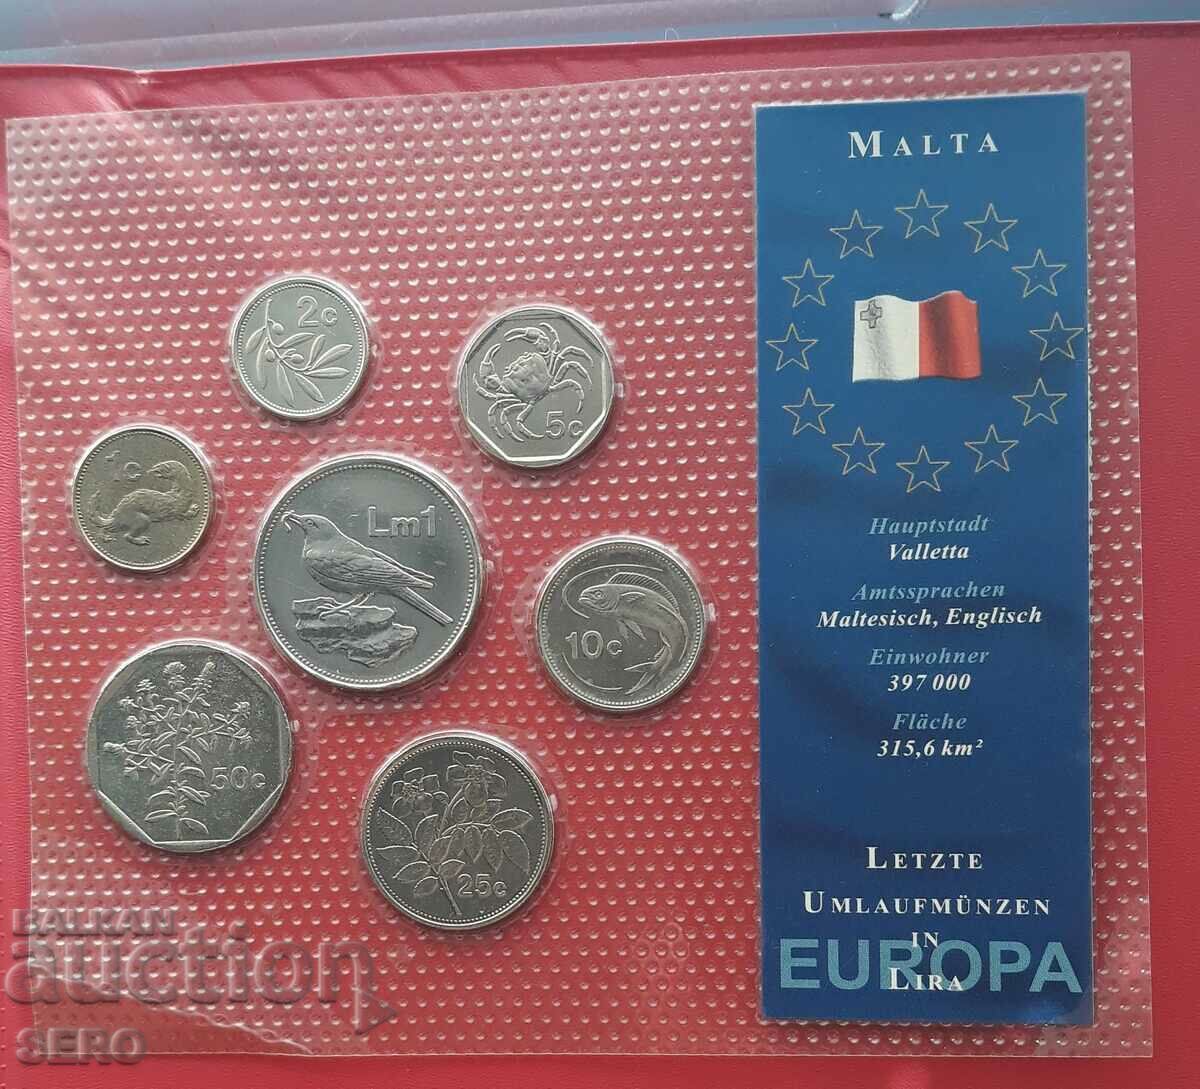 Malta-SET of 7 coins 1998-2004